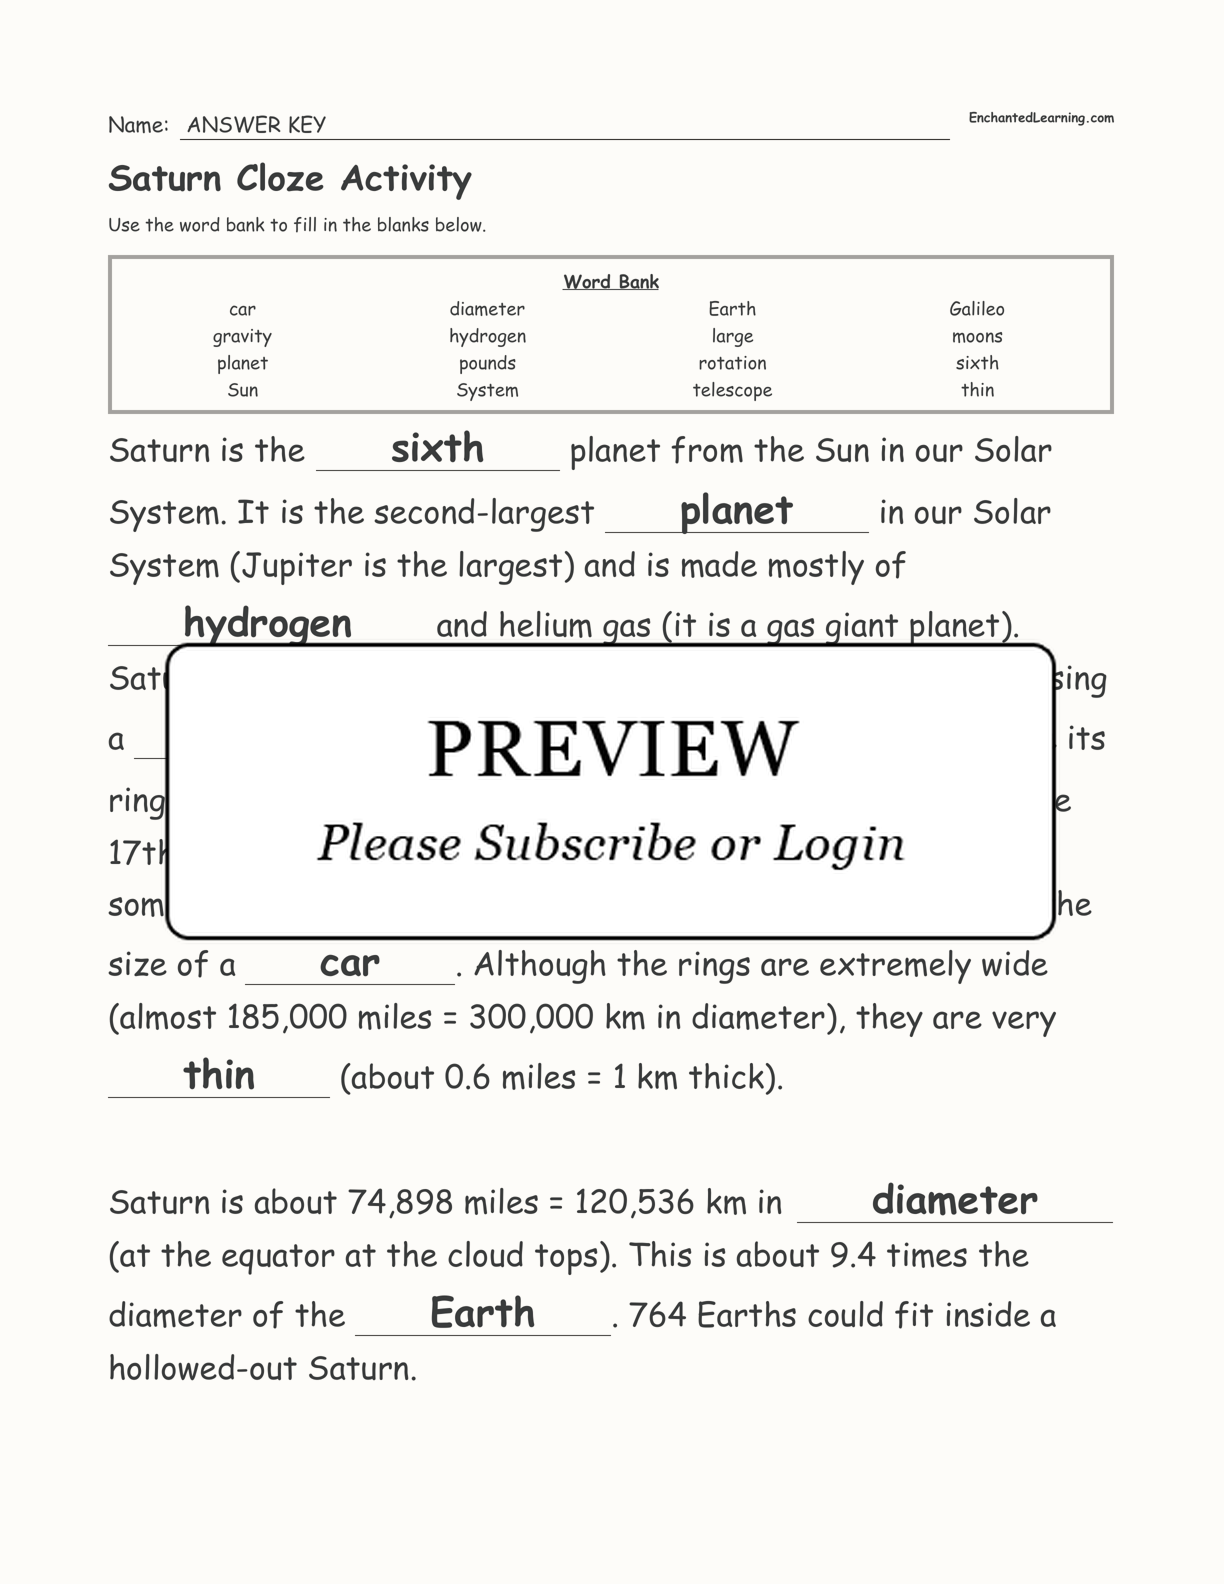 Saturn Cloze Activity interactive worksheet page 3